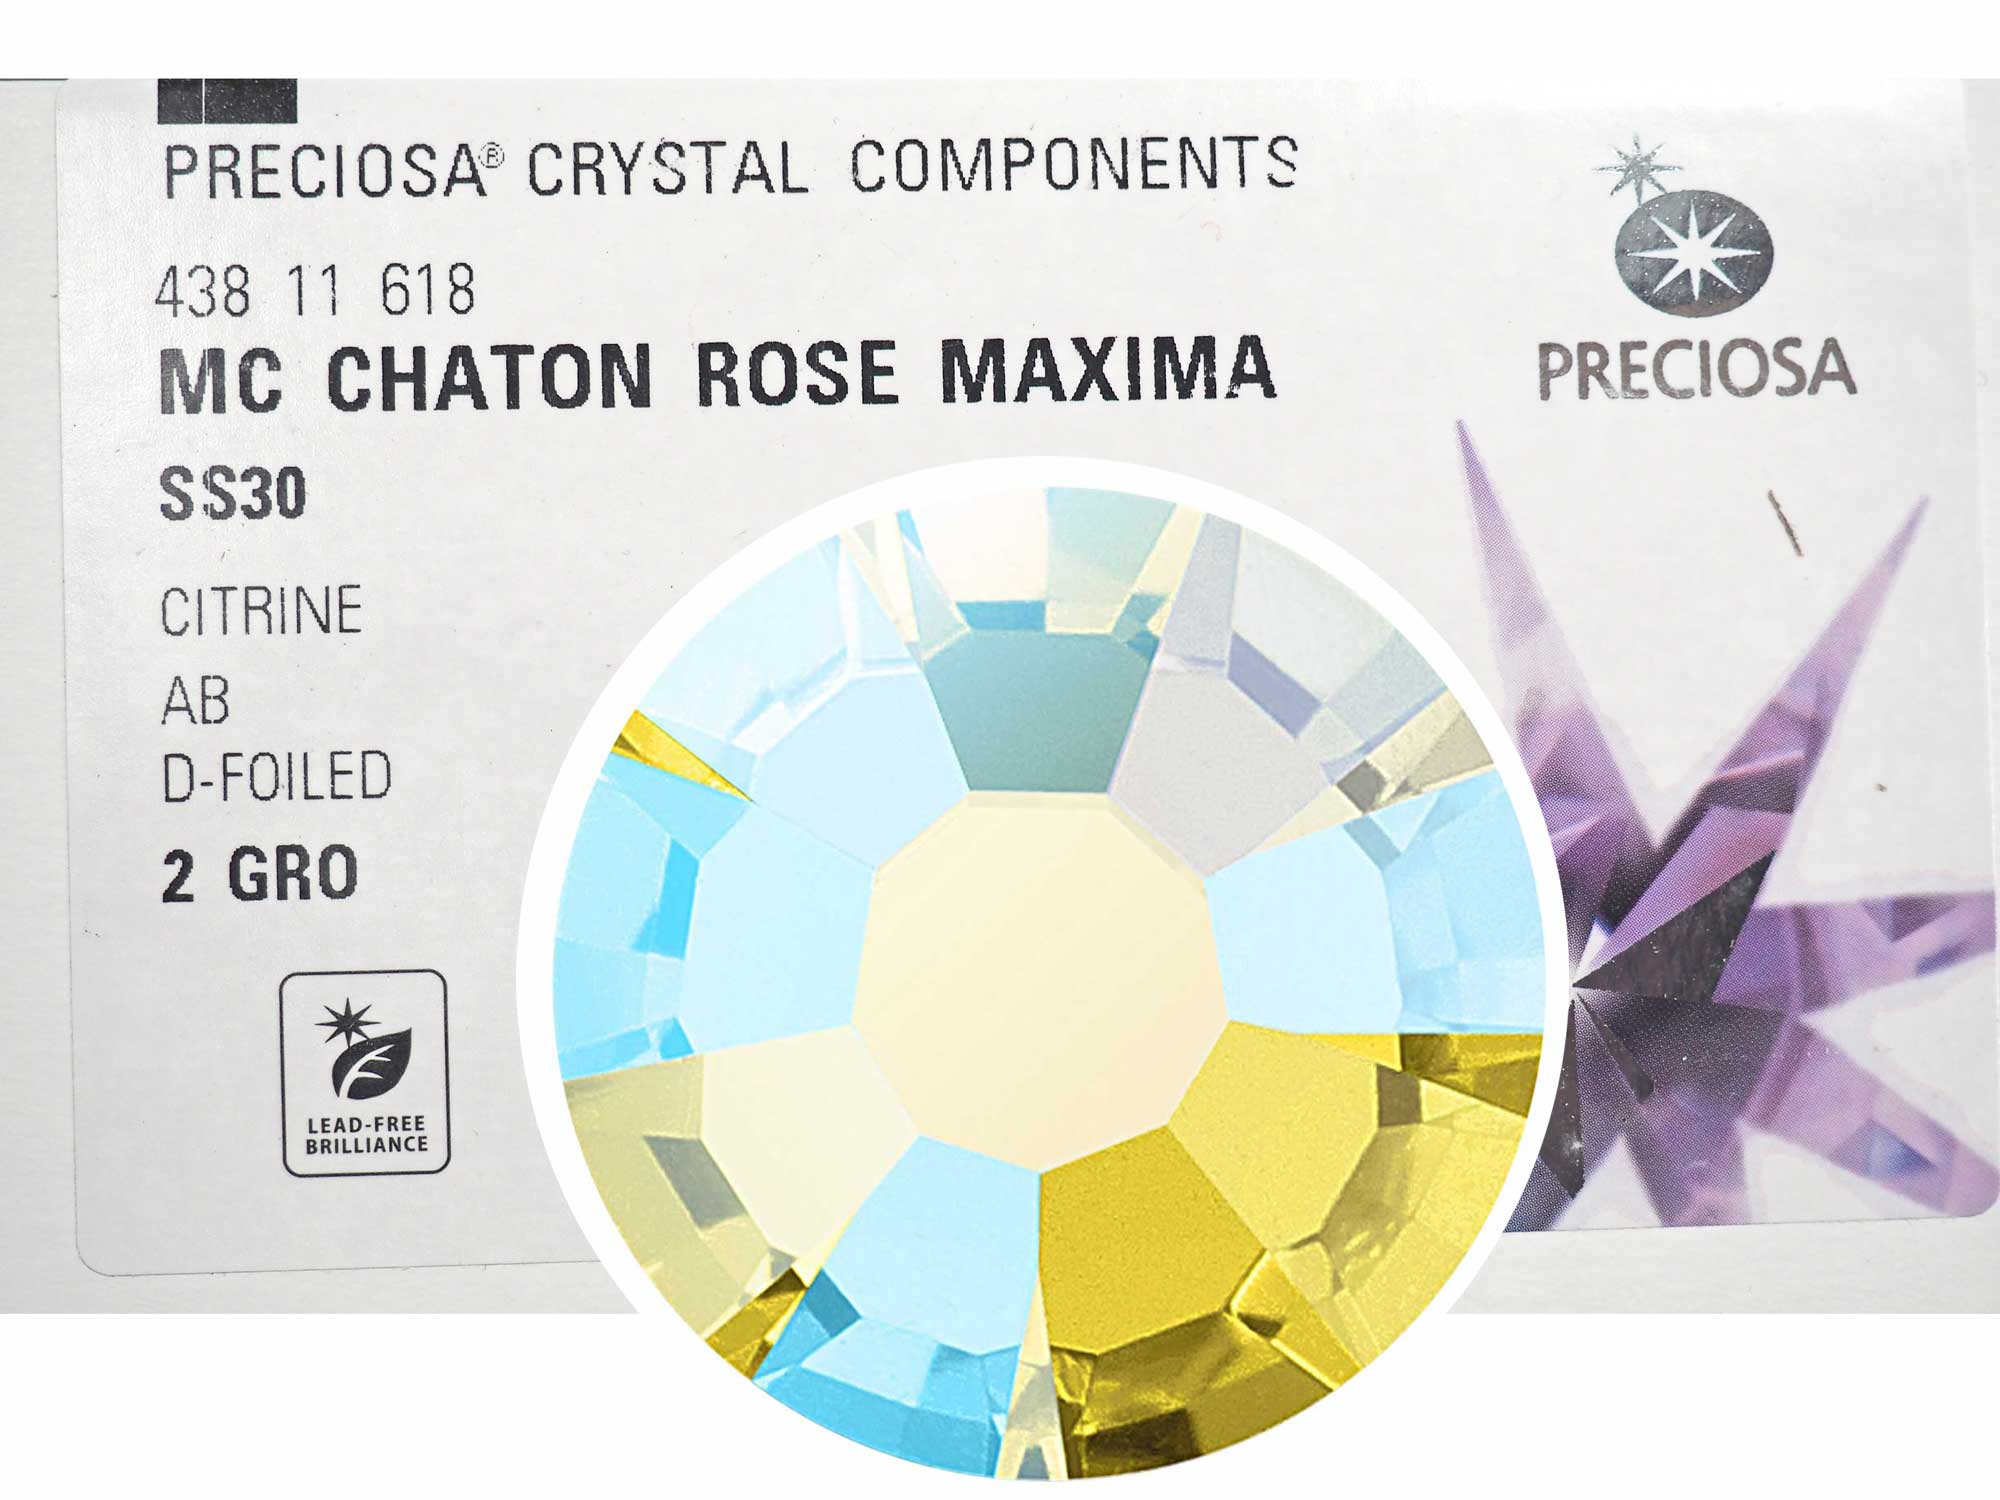 Citrine AB, Preciosa VIVA or MAXIMA Chaton Roses (Rhinestone Flatbacks), Genuine Czech Crystals, rich yellow coated with Aurora Borealis